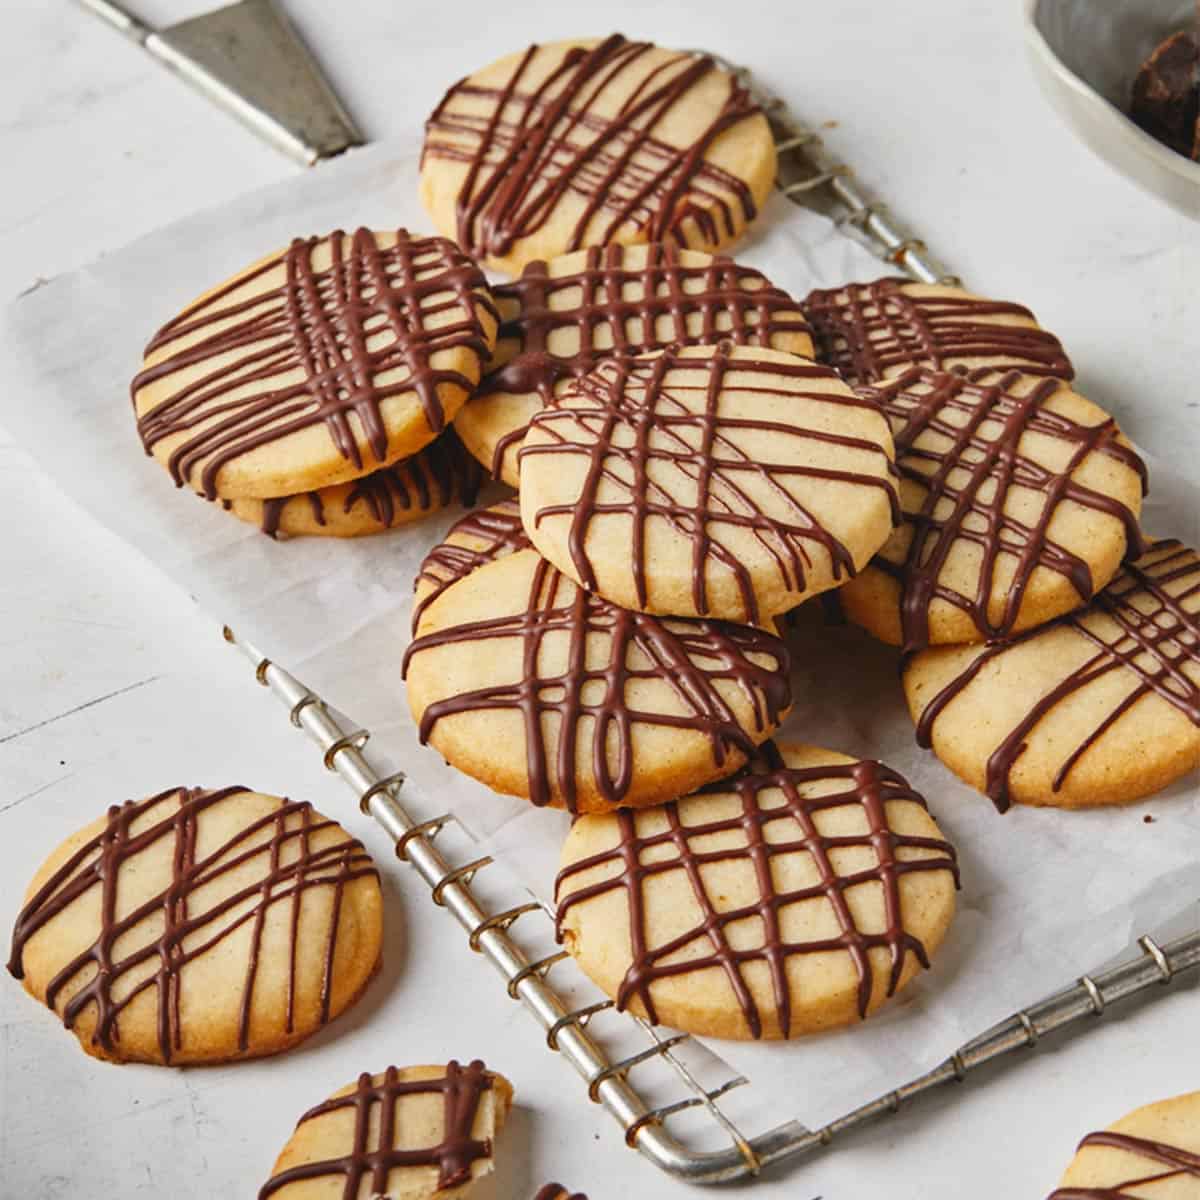 https://grandbaby-cakes.com/wp-content/uploads/2018/12/Shortbread-Cookie-Recipe-2.jpg